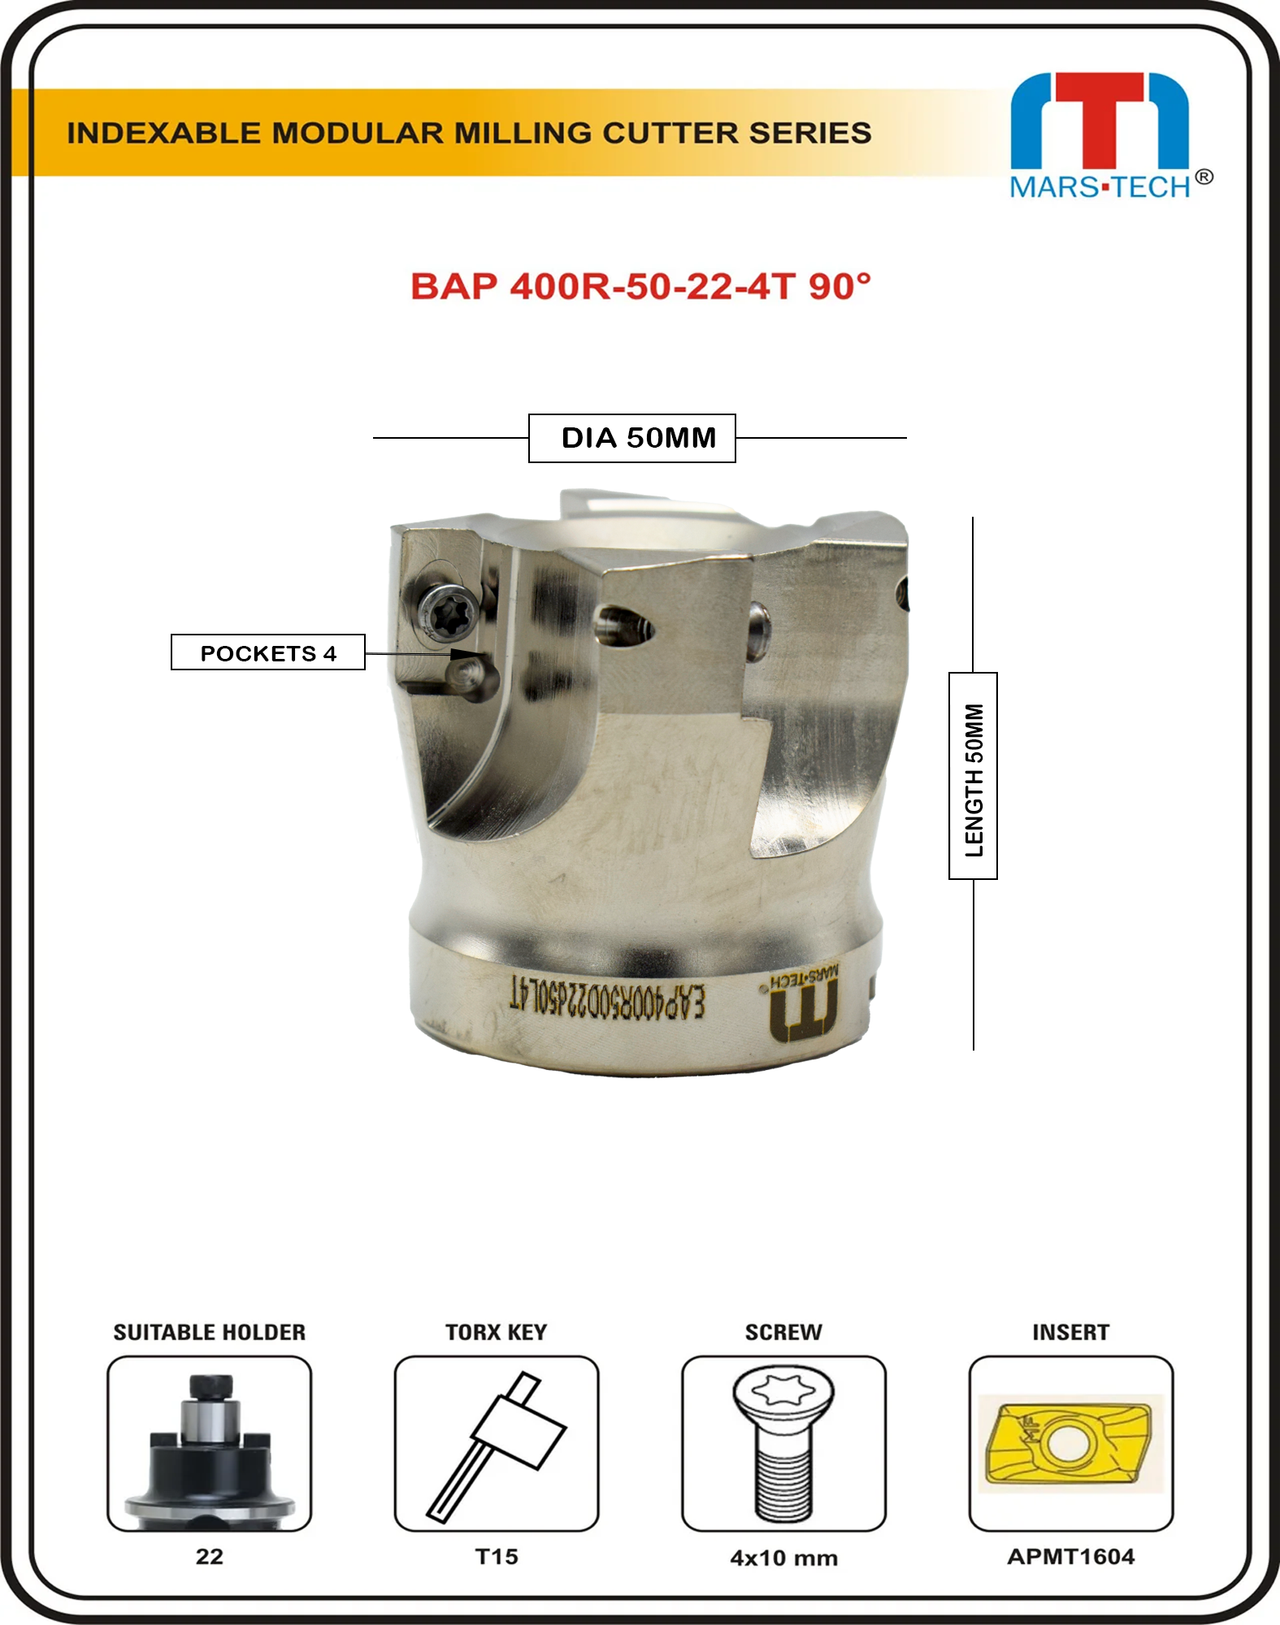 BAP400R-50-22-4T Face Milling Cutter Dia 50 Modular Type Suitable To APMT1604 Insert Bull Cutter